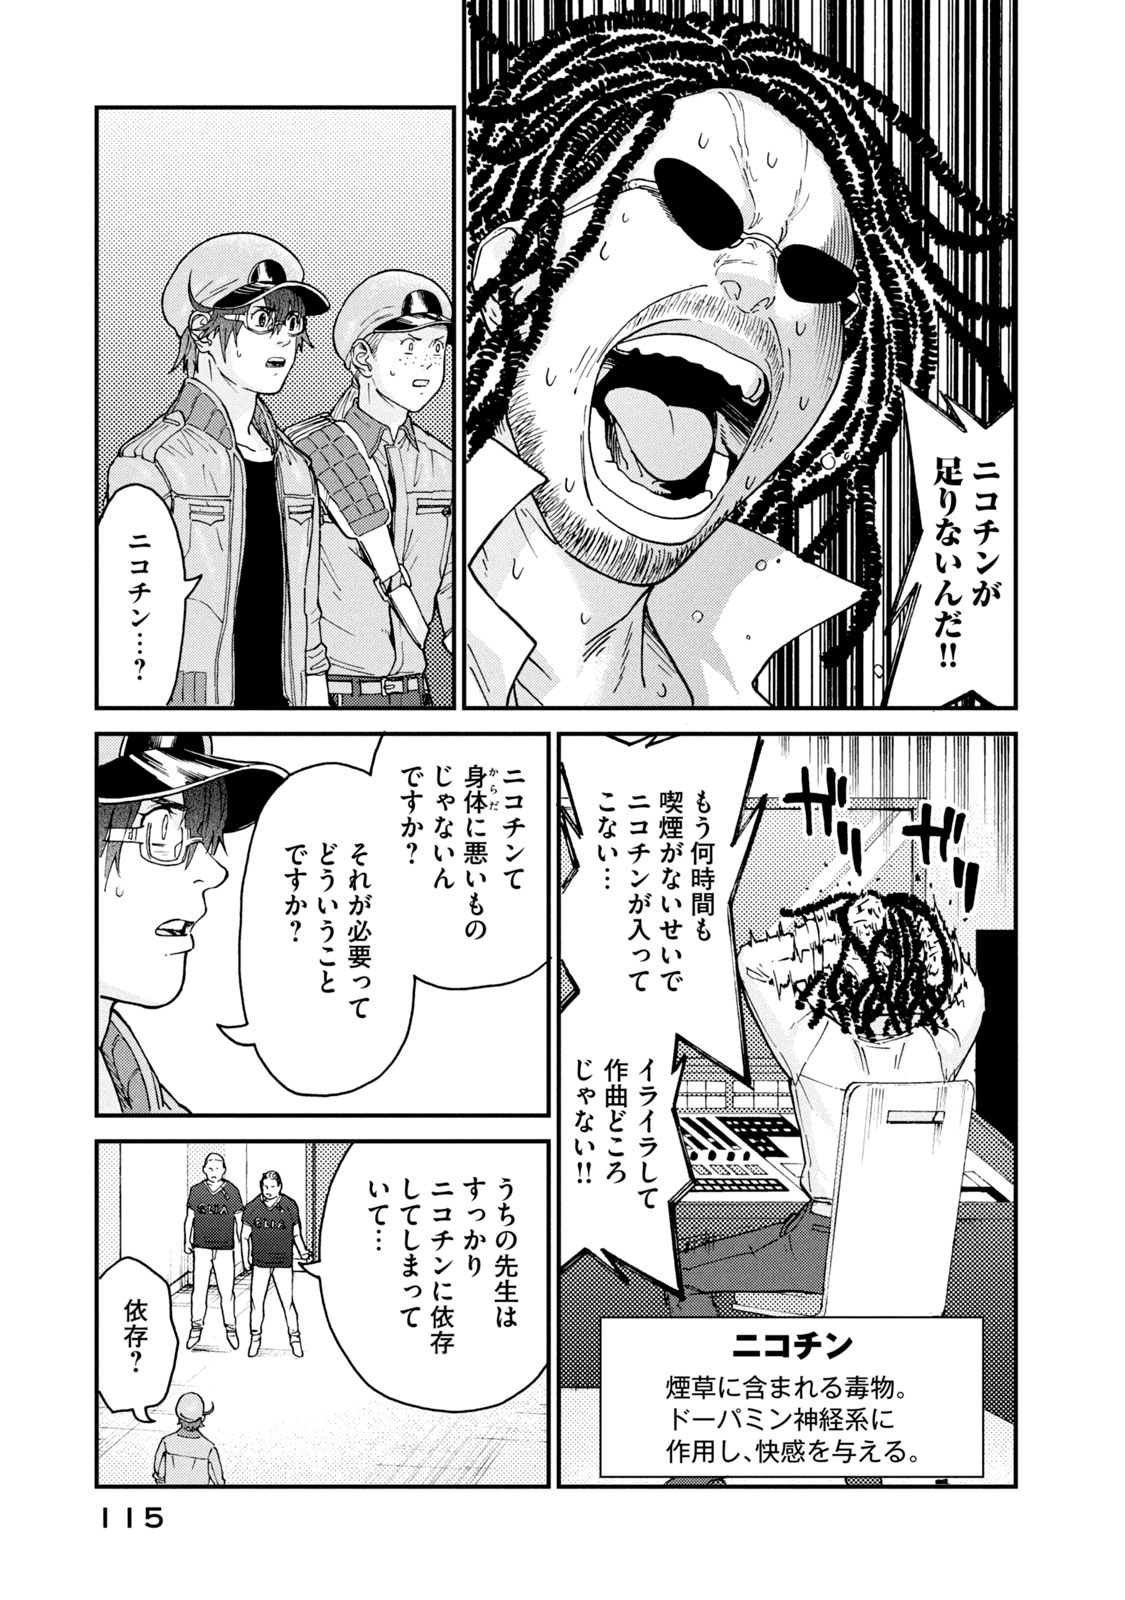 Hataraku Saibou BLACK - Chapter 35 - Page 23